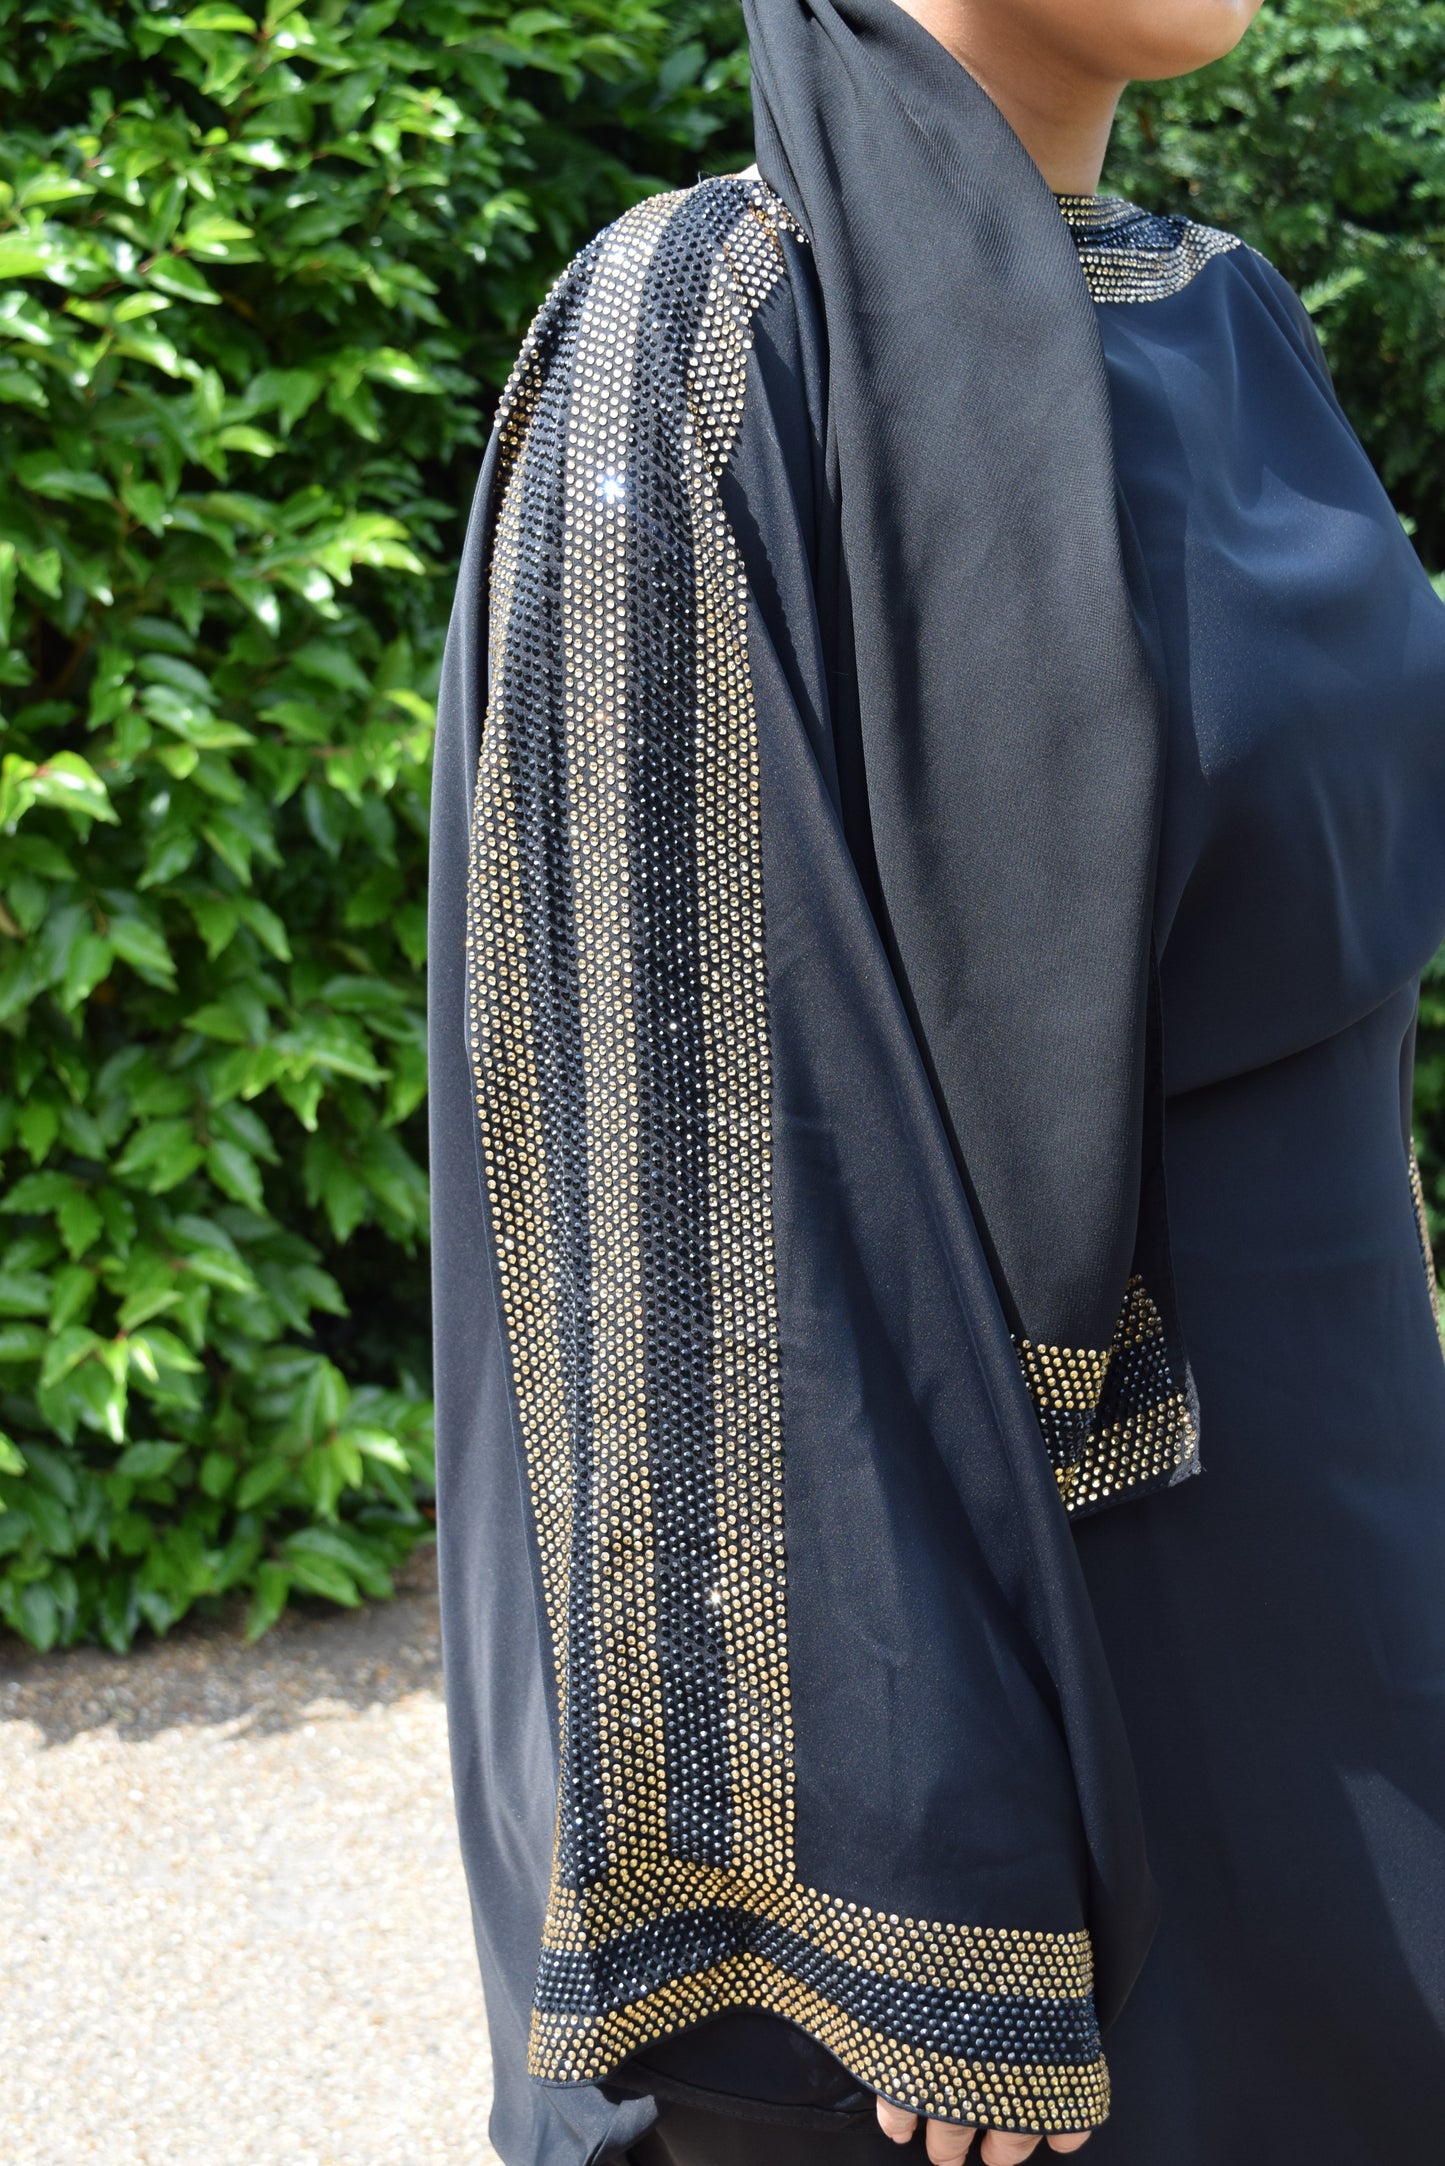 Nihal Modest Batwing Abaya in embellished Black